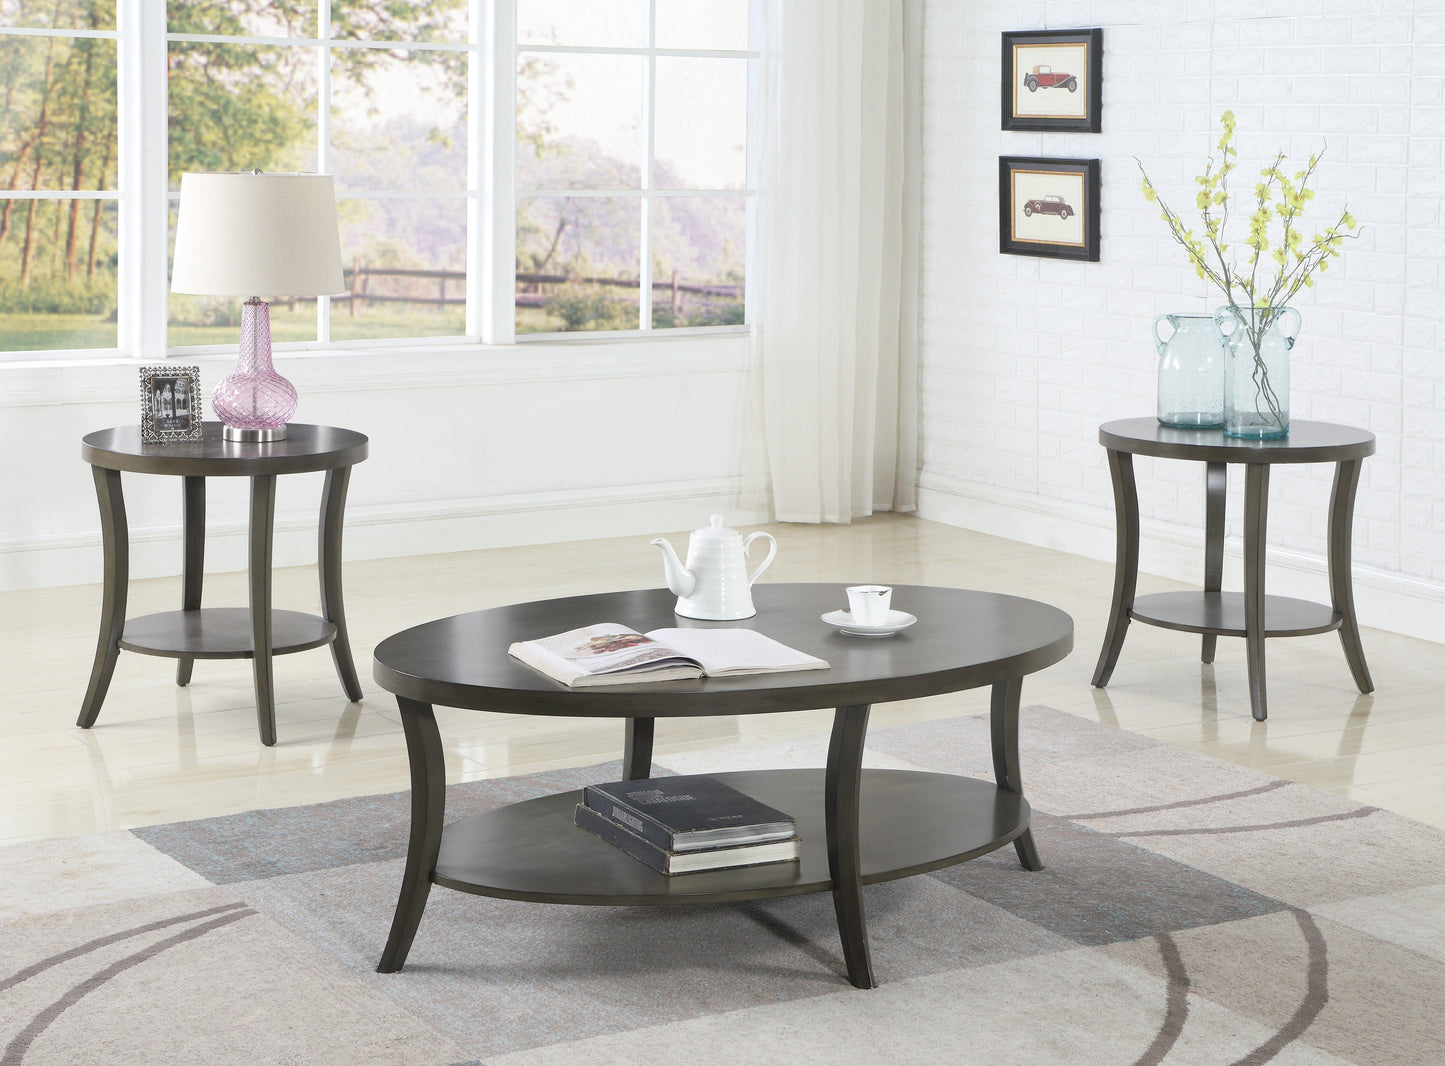 Perth Contemporary Oval Shelf Coffee Table Set, Gray